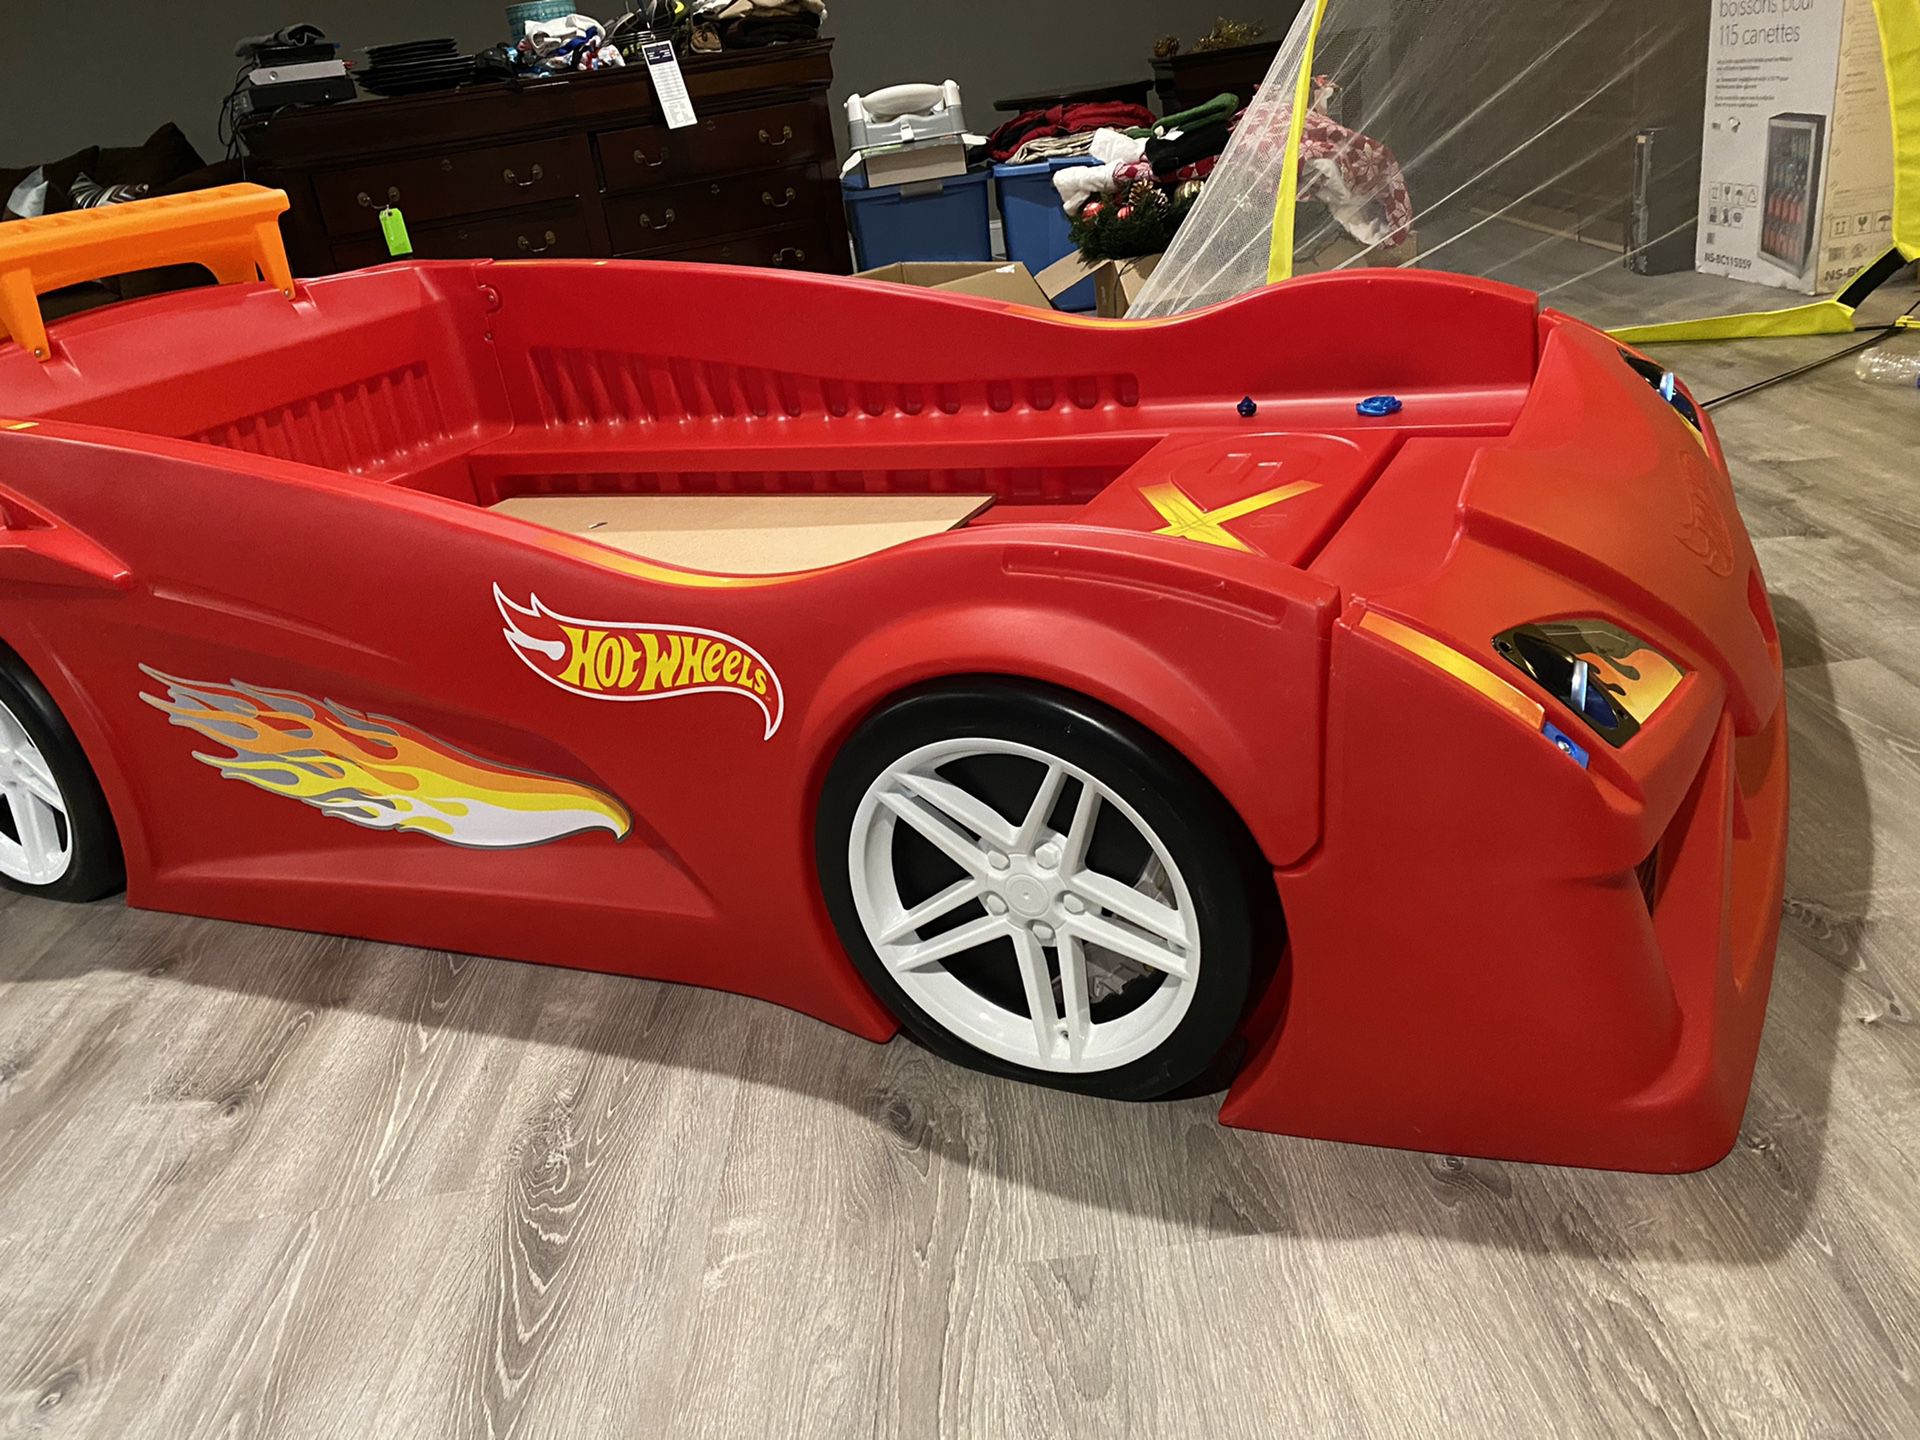 Hot Wheels car bed